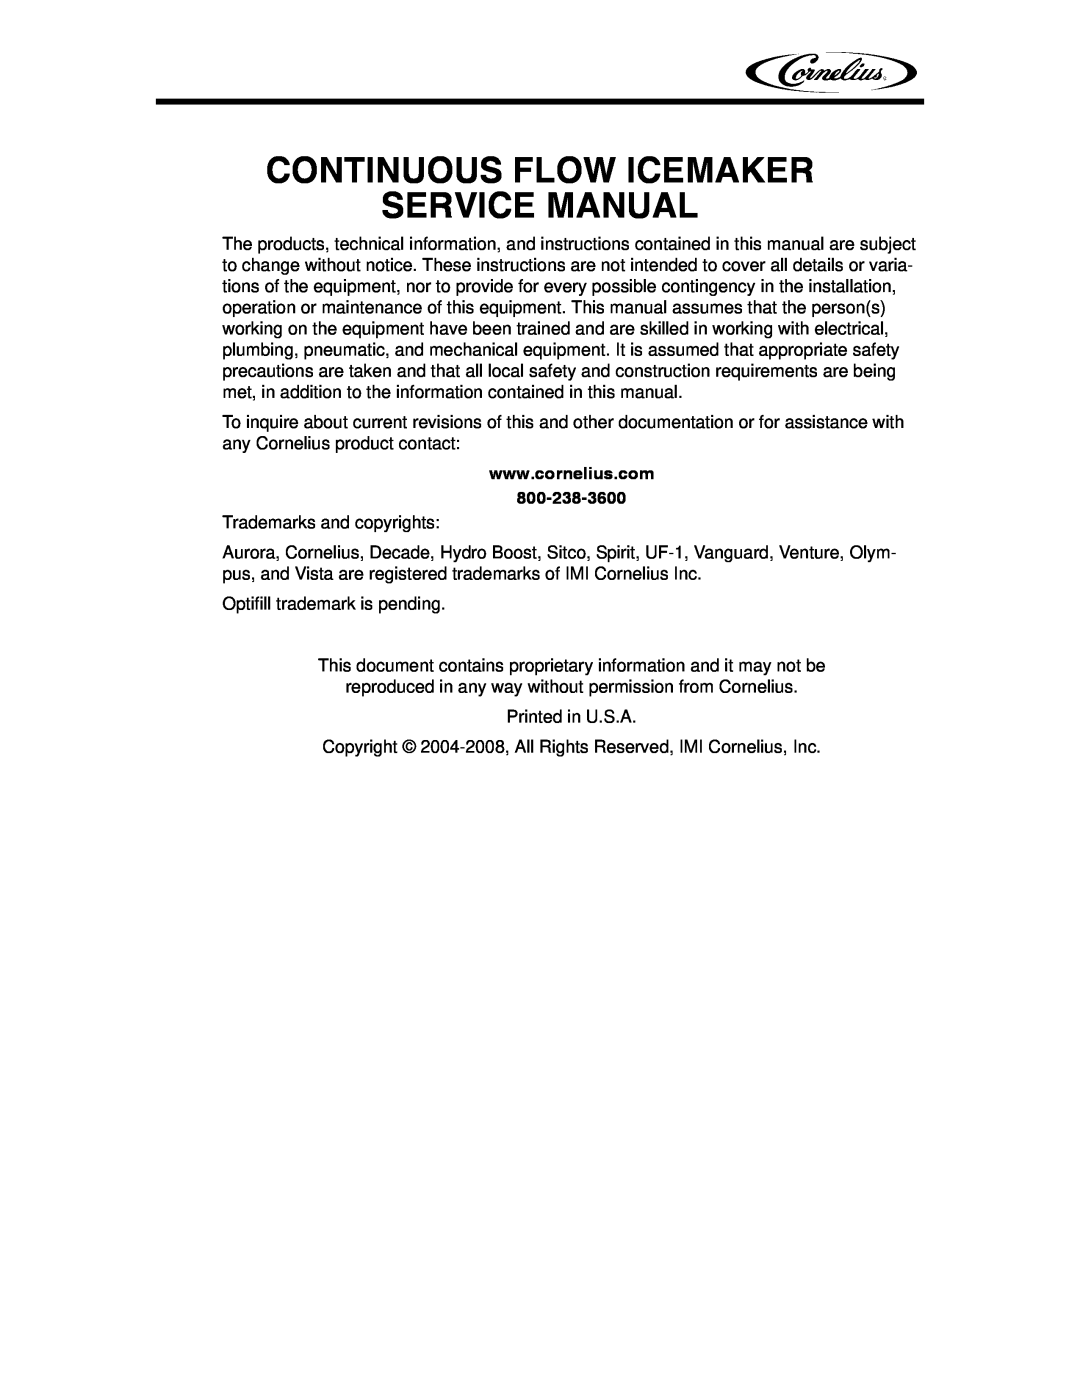 Cornelius 1000 service manual 